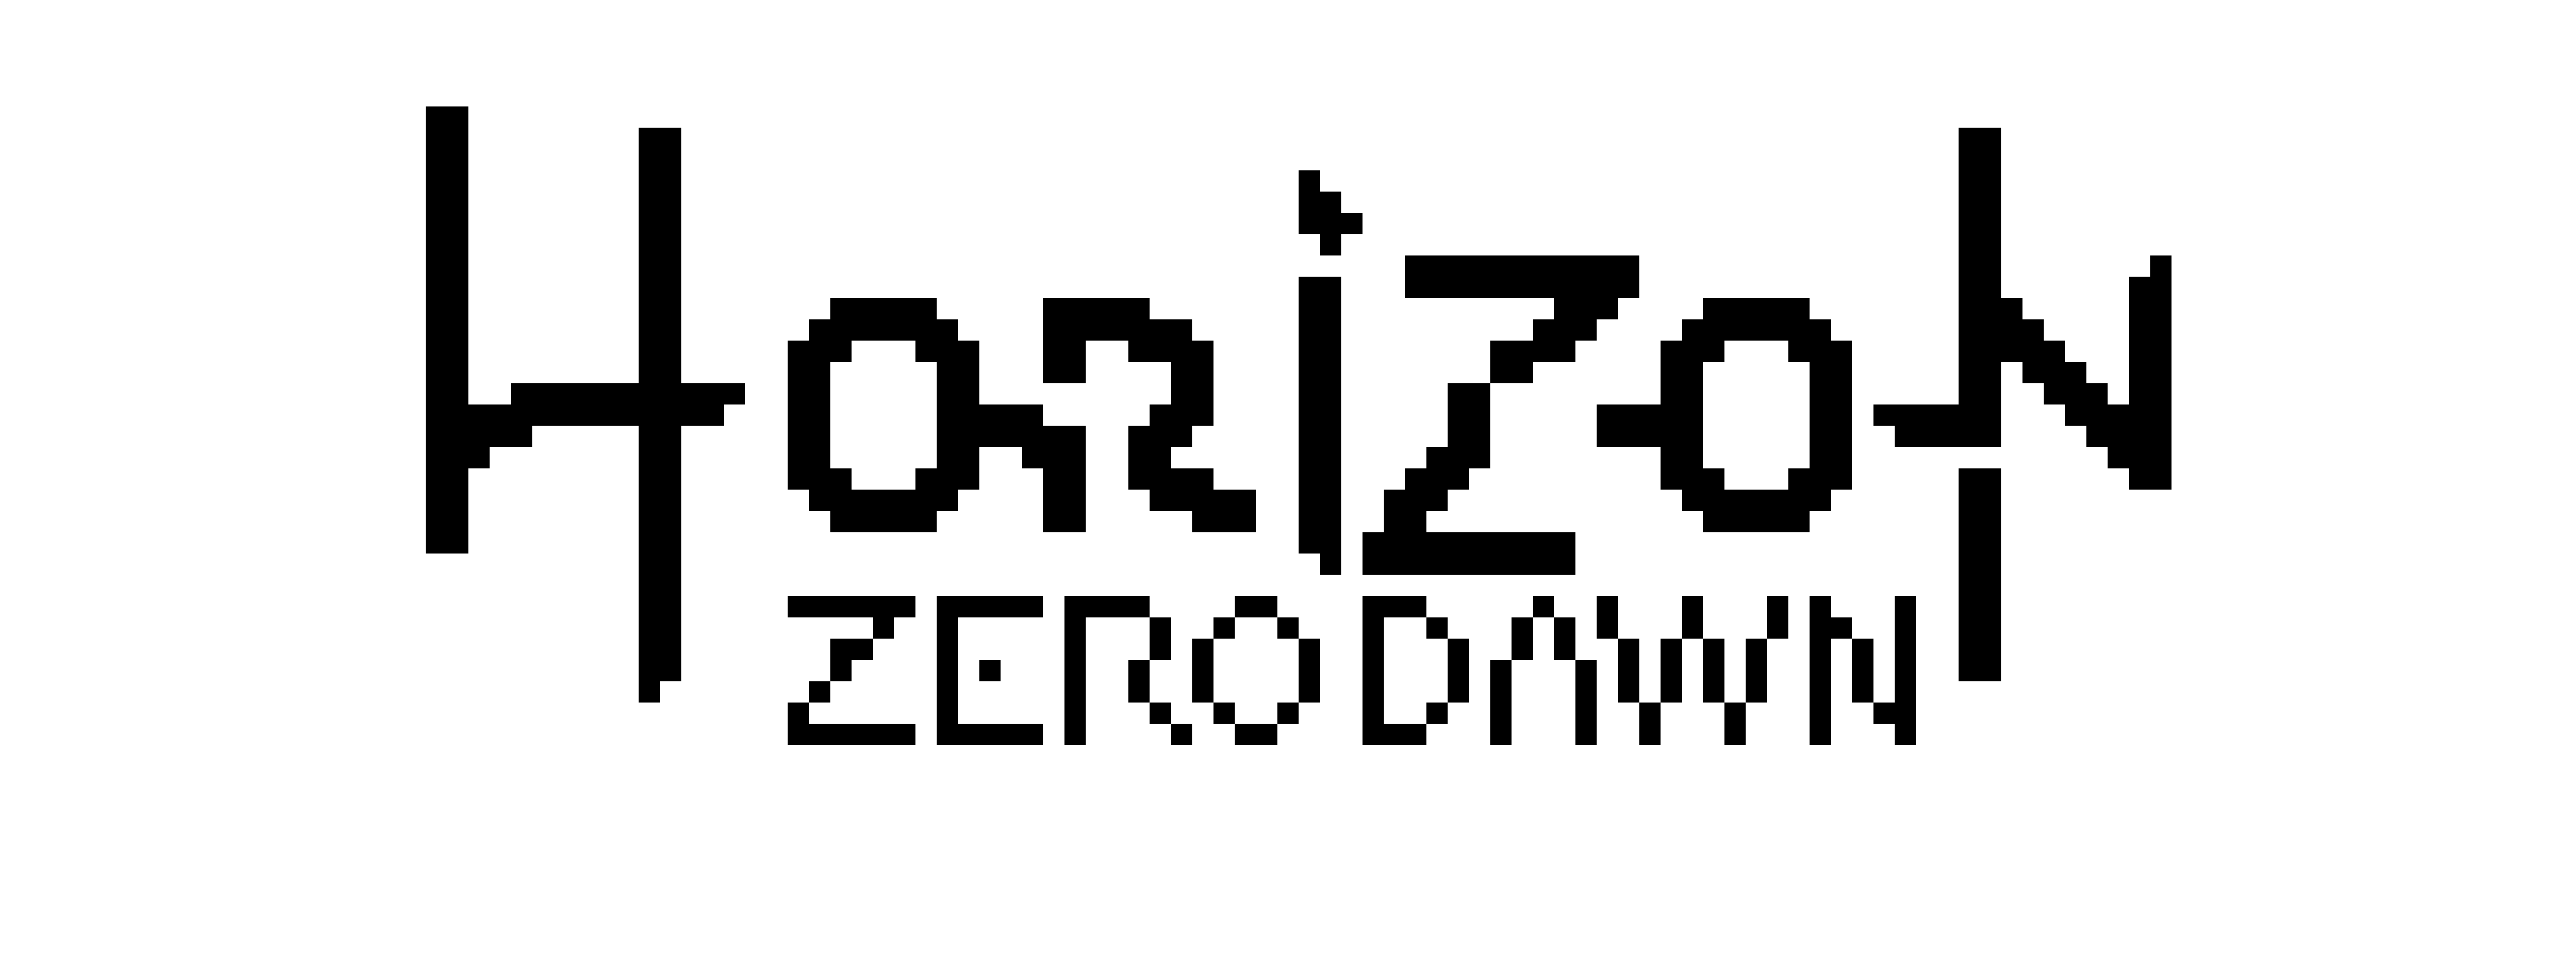 Horizon Logo Animated